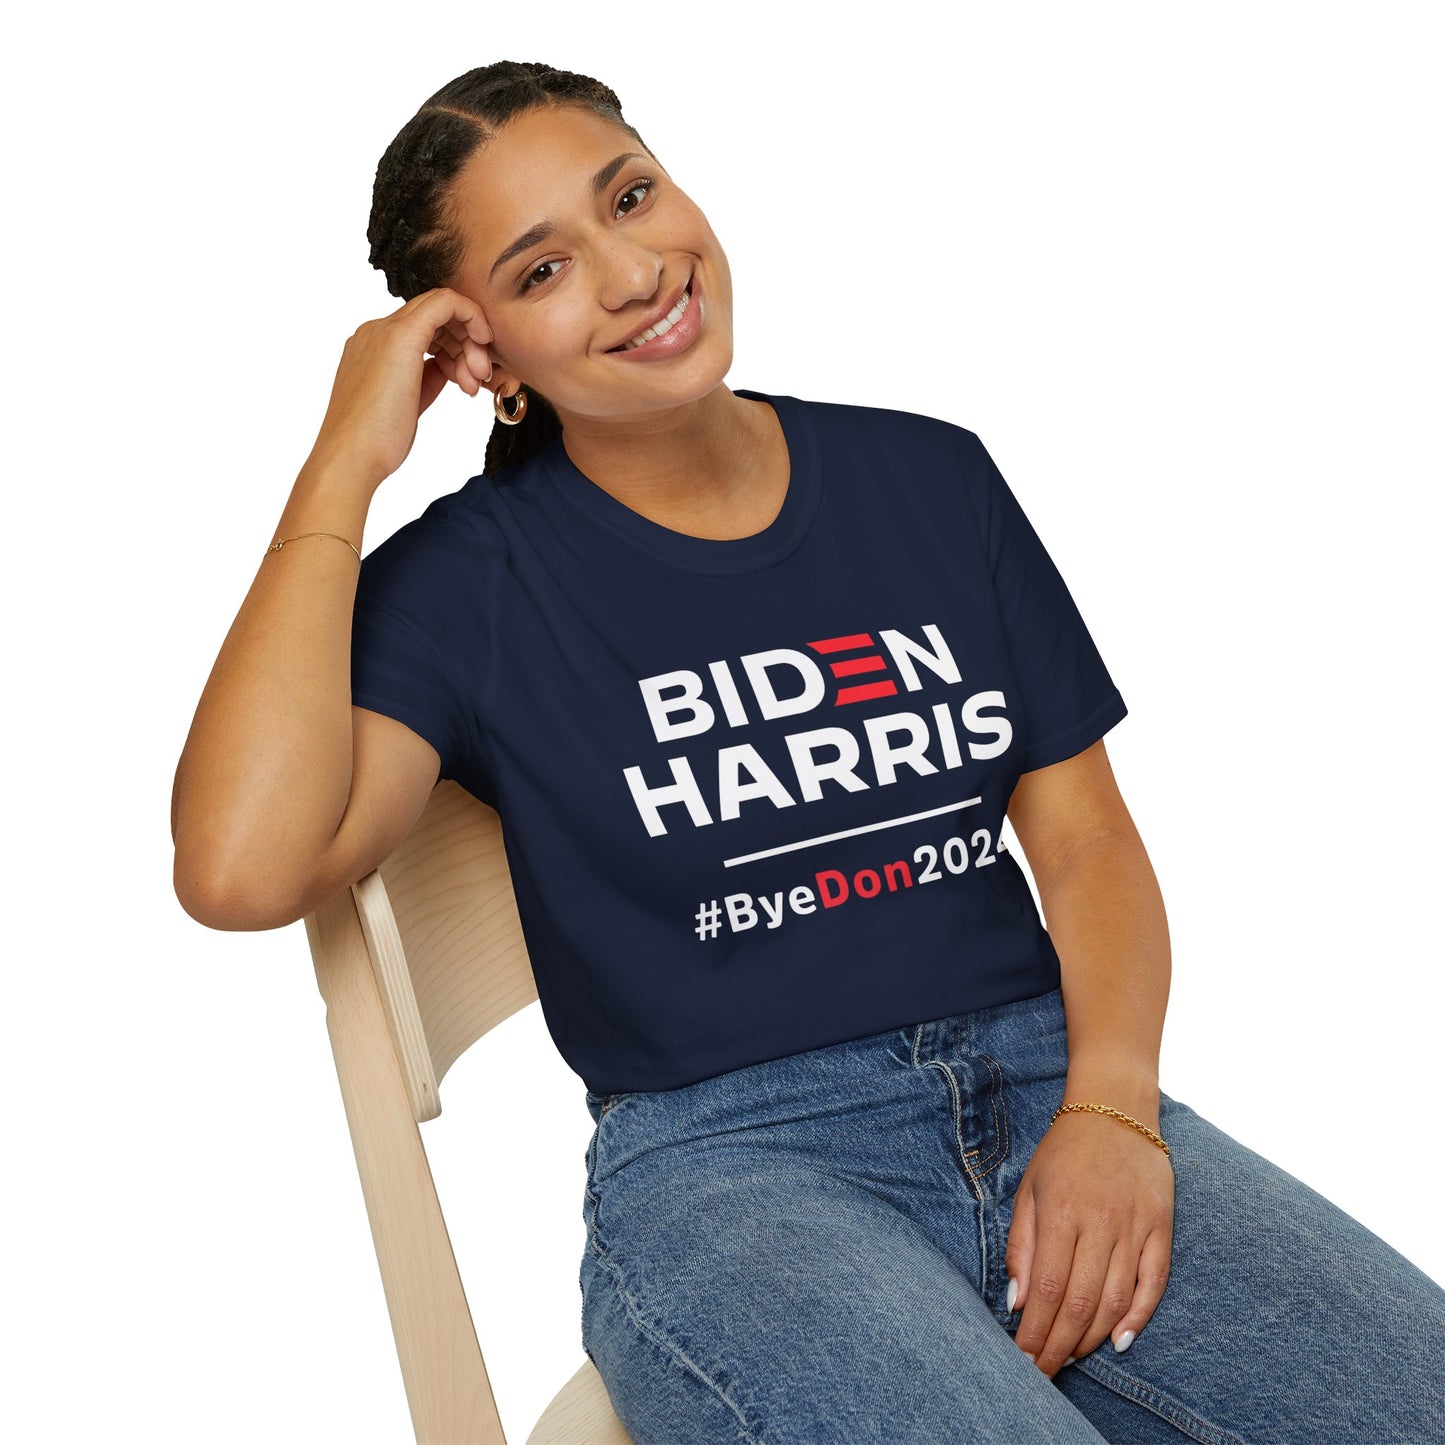 "Biden Harris #ByeDon2024 Election" Unisex T-Shirt